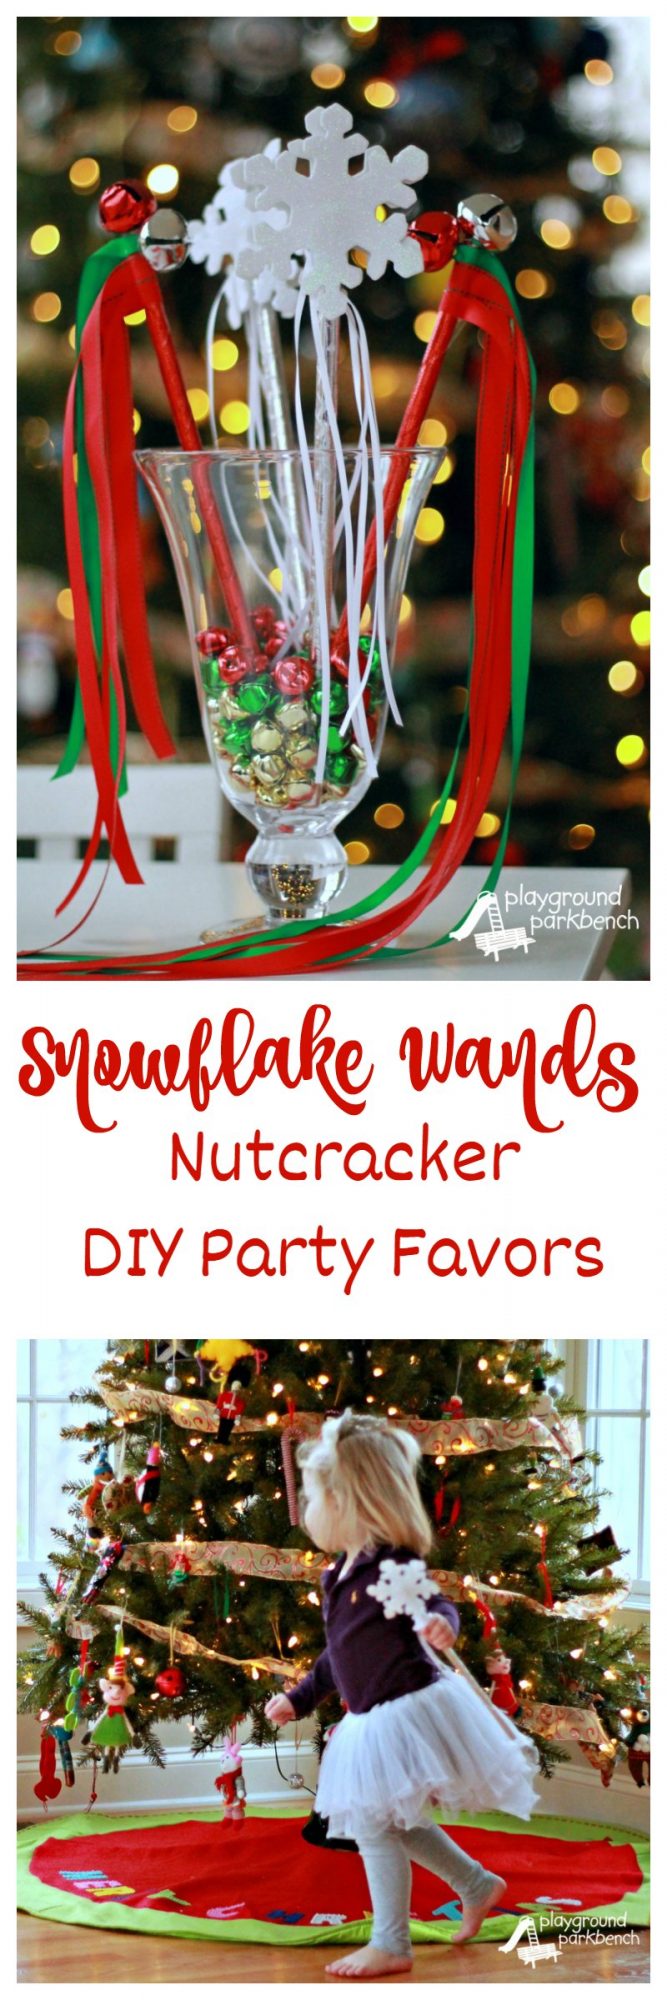 Snowflake Wands Nutcracker DIY Party Favors